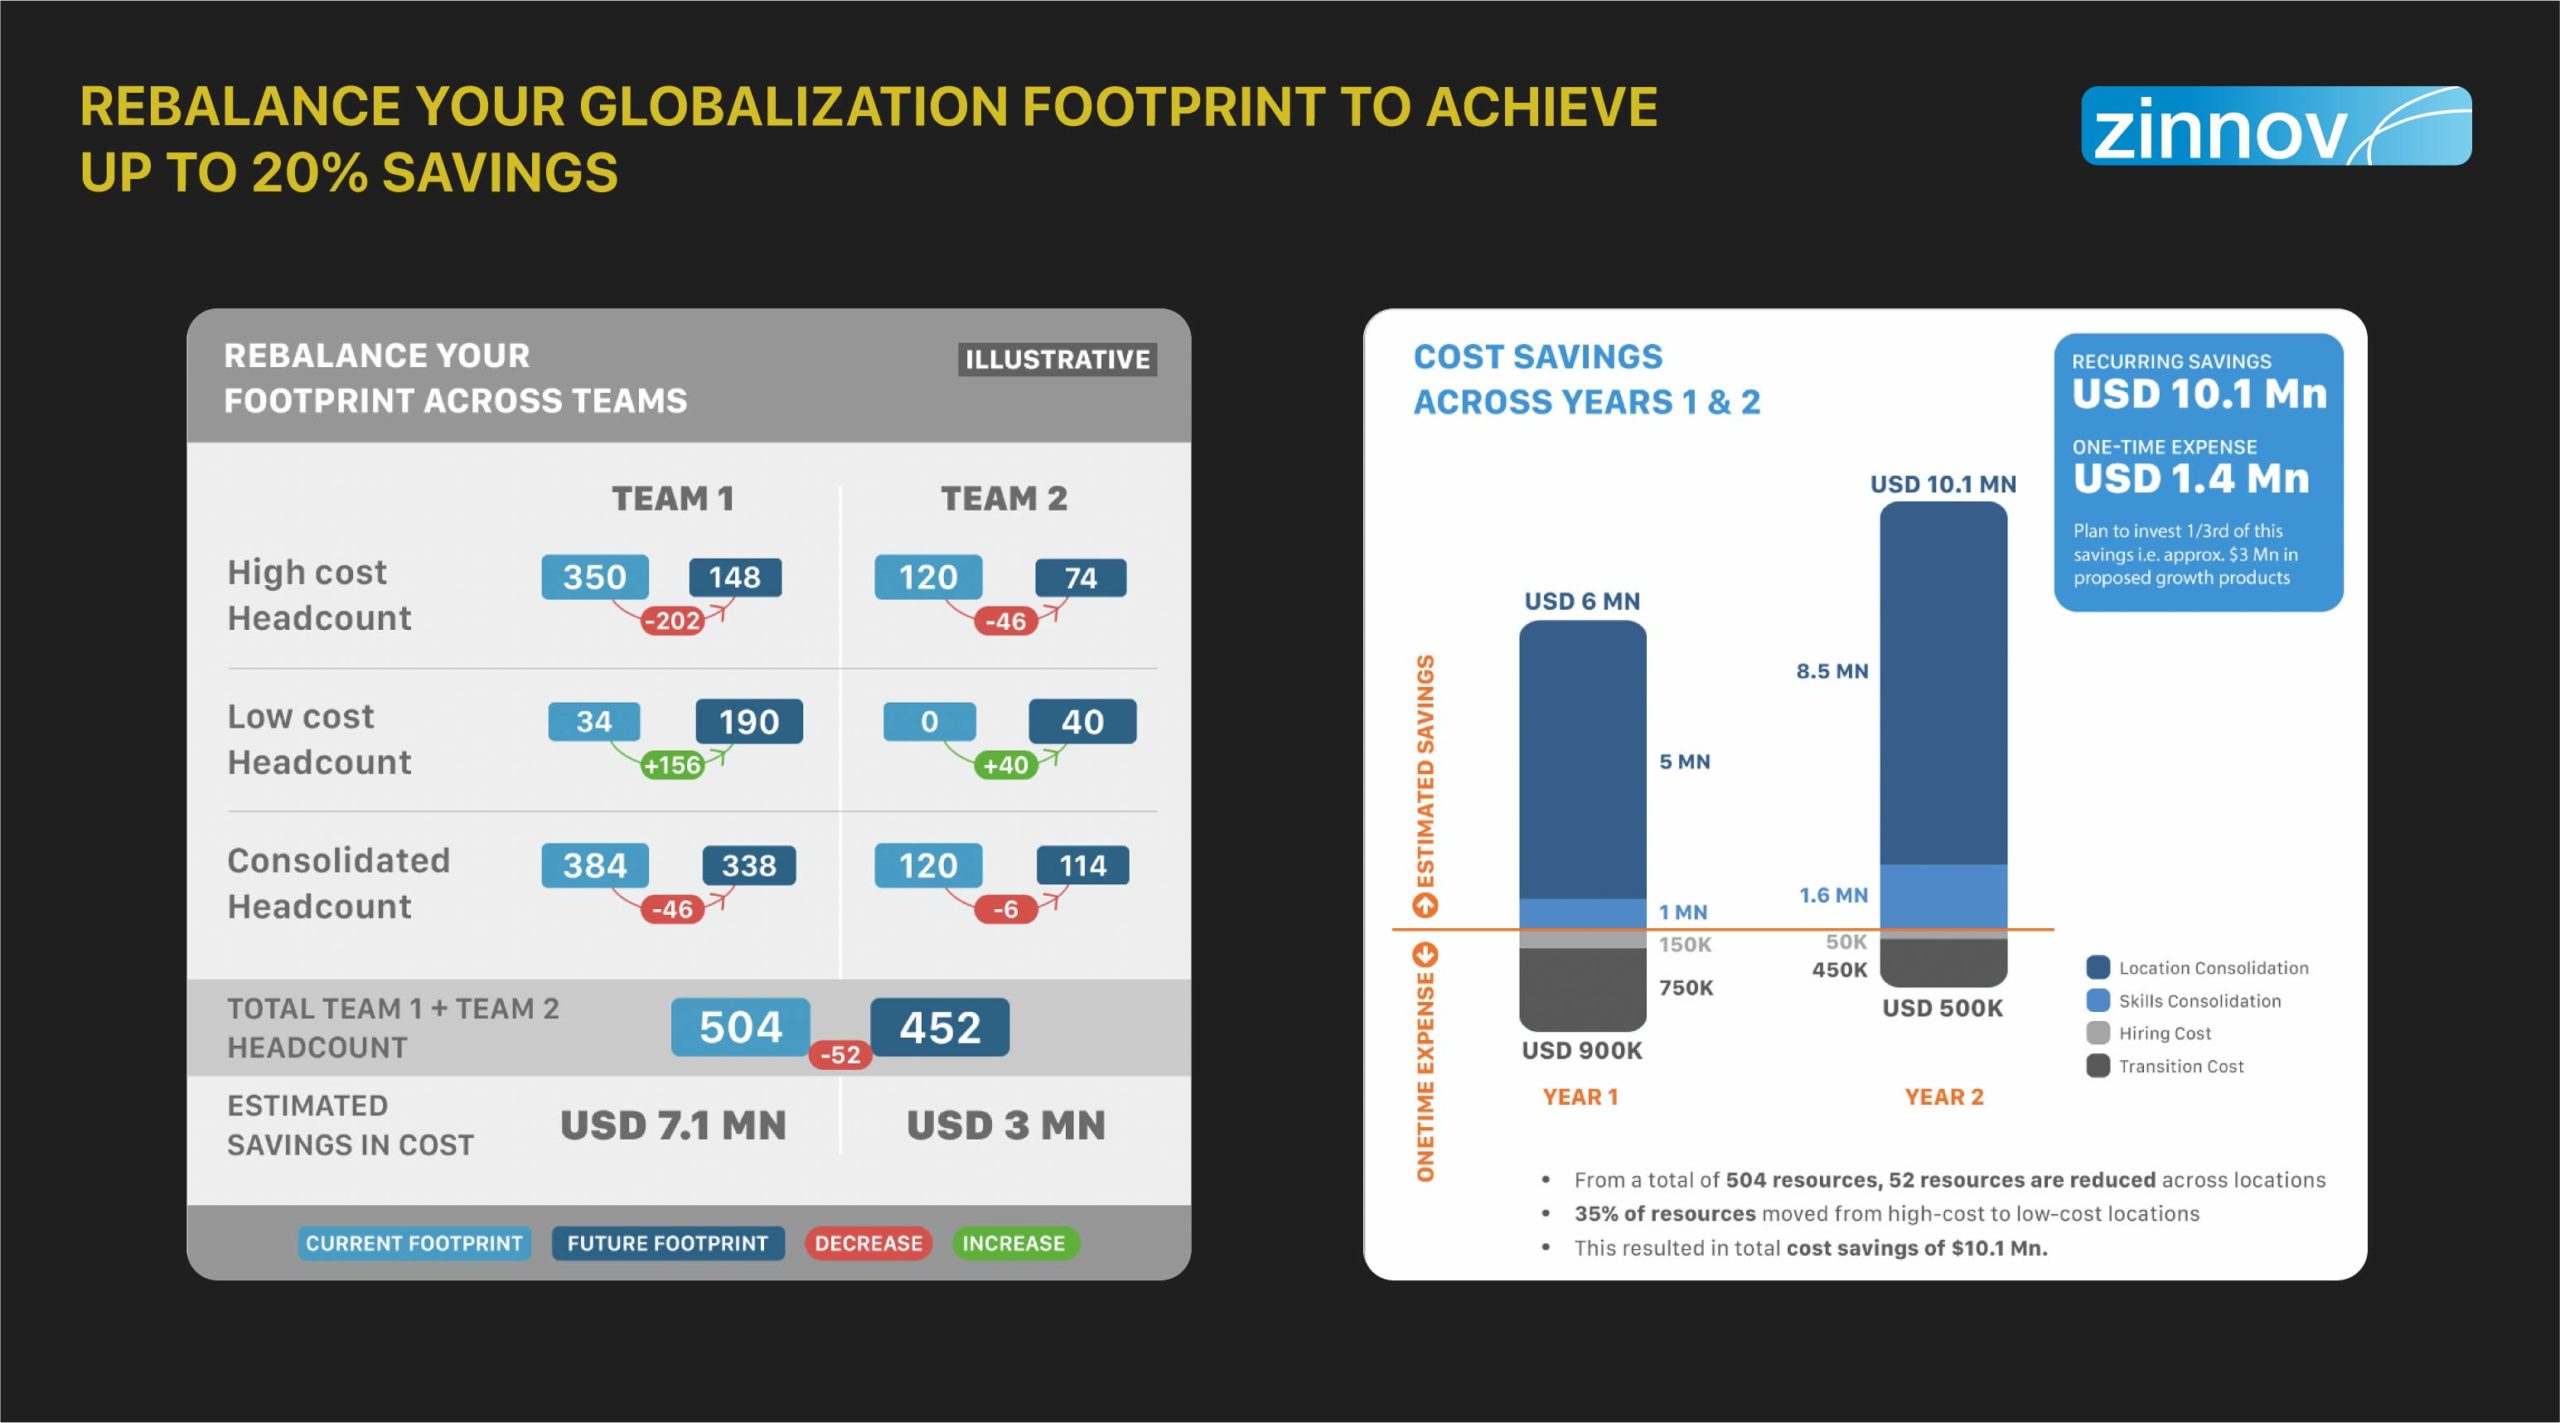 Rebalancing globalization footprint to achieve up to 20% savings